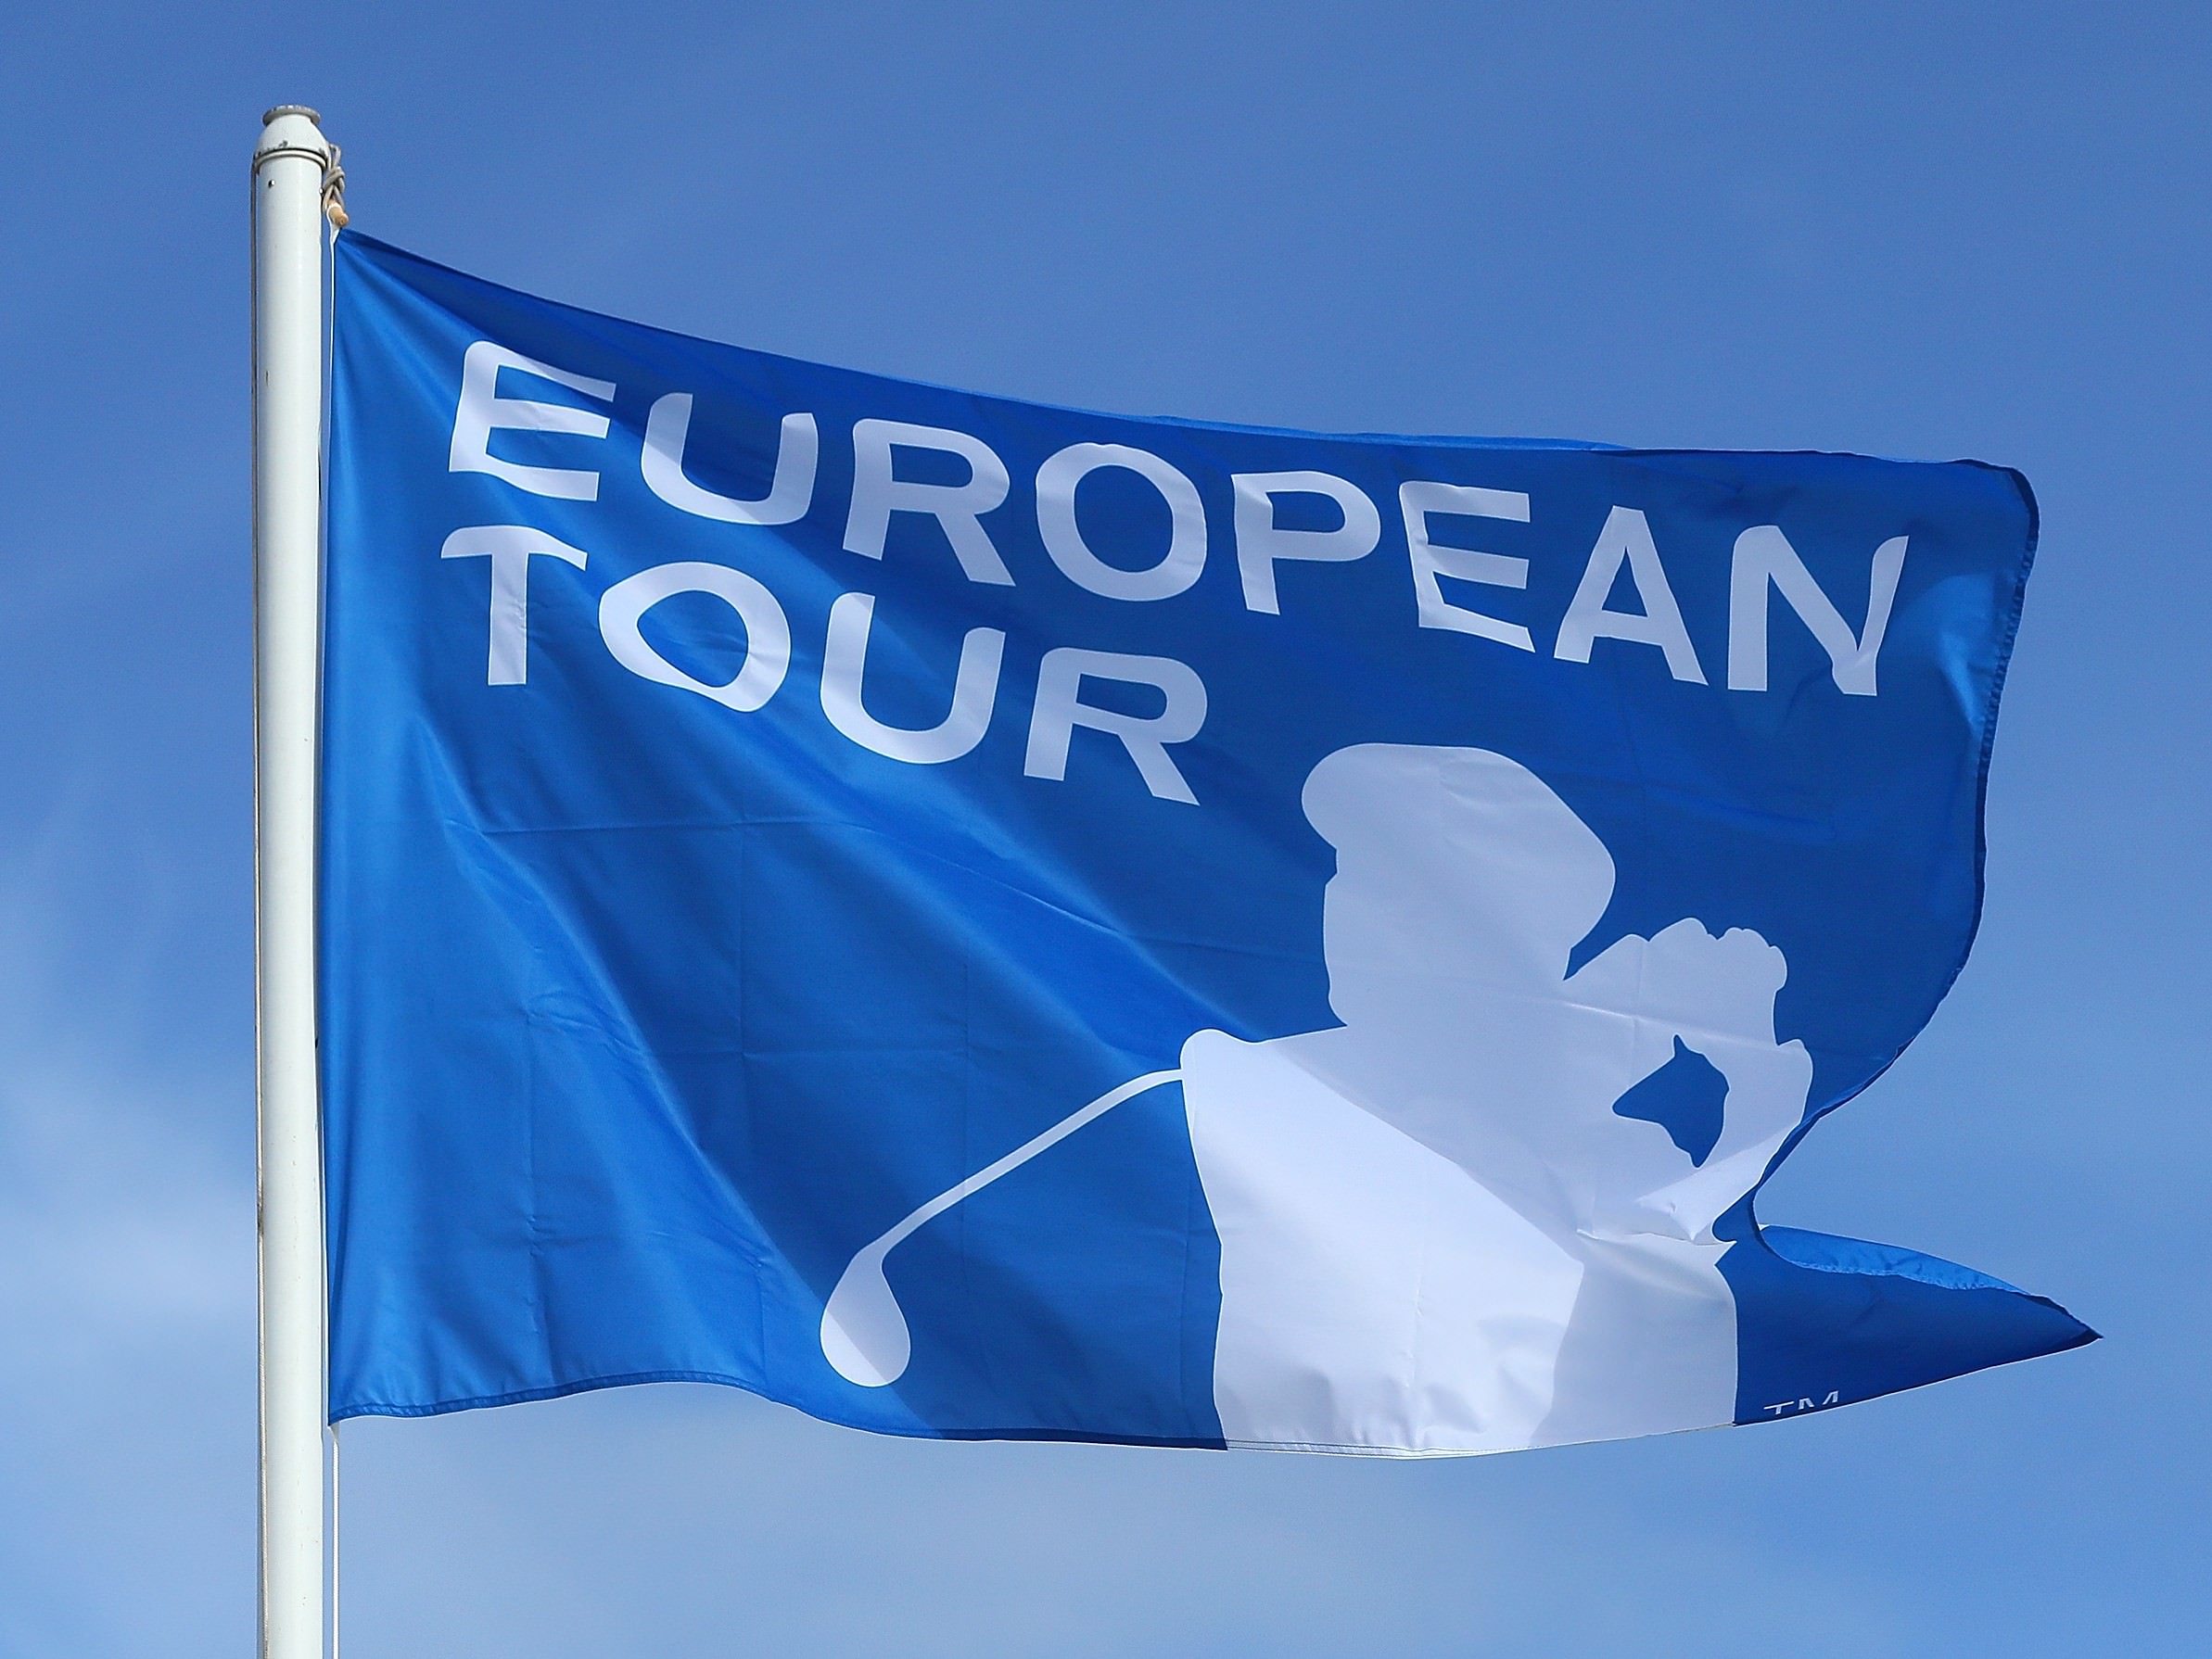 european tour schedule today